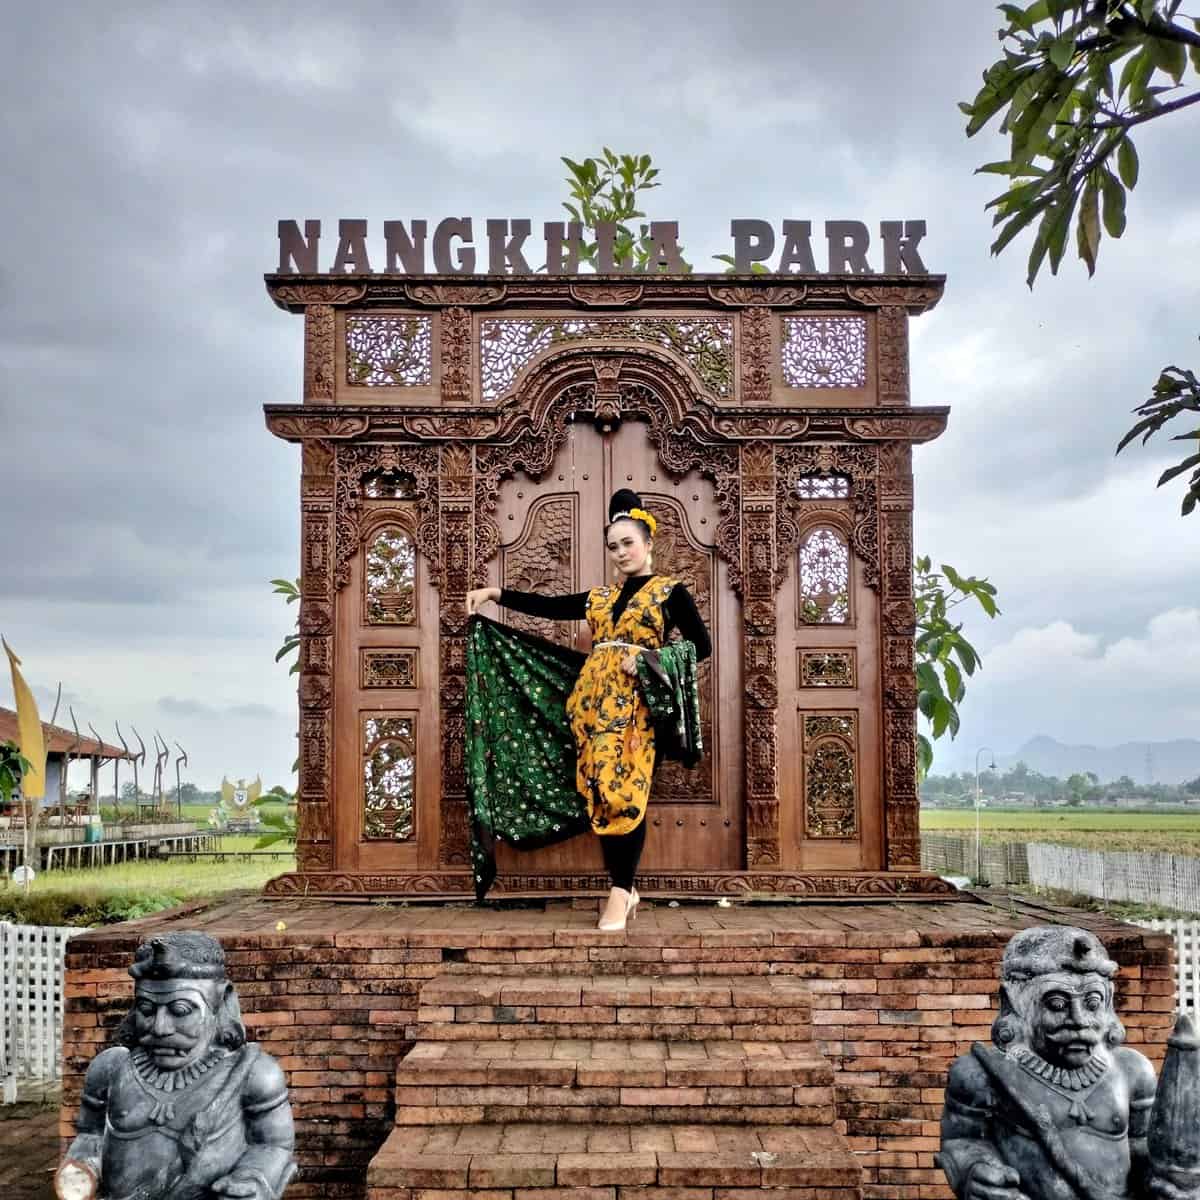 wisata nangkula park